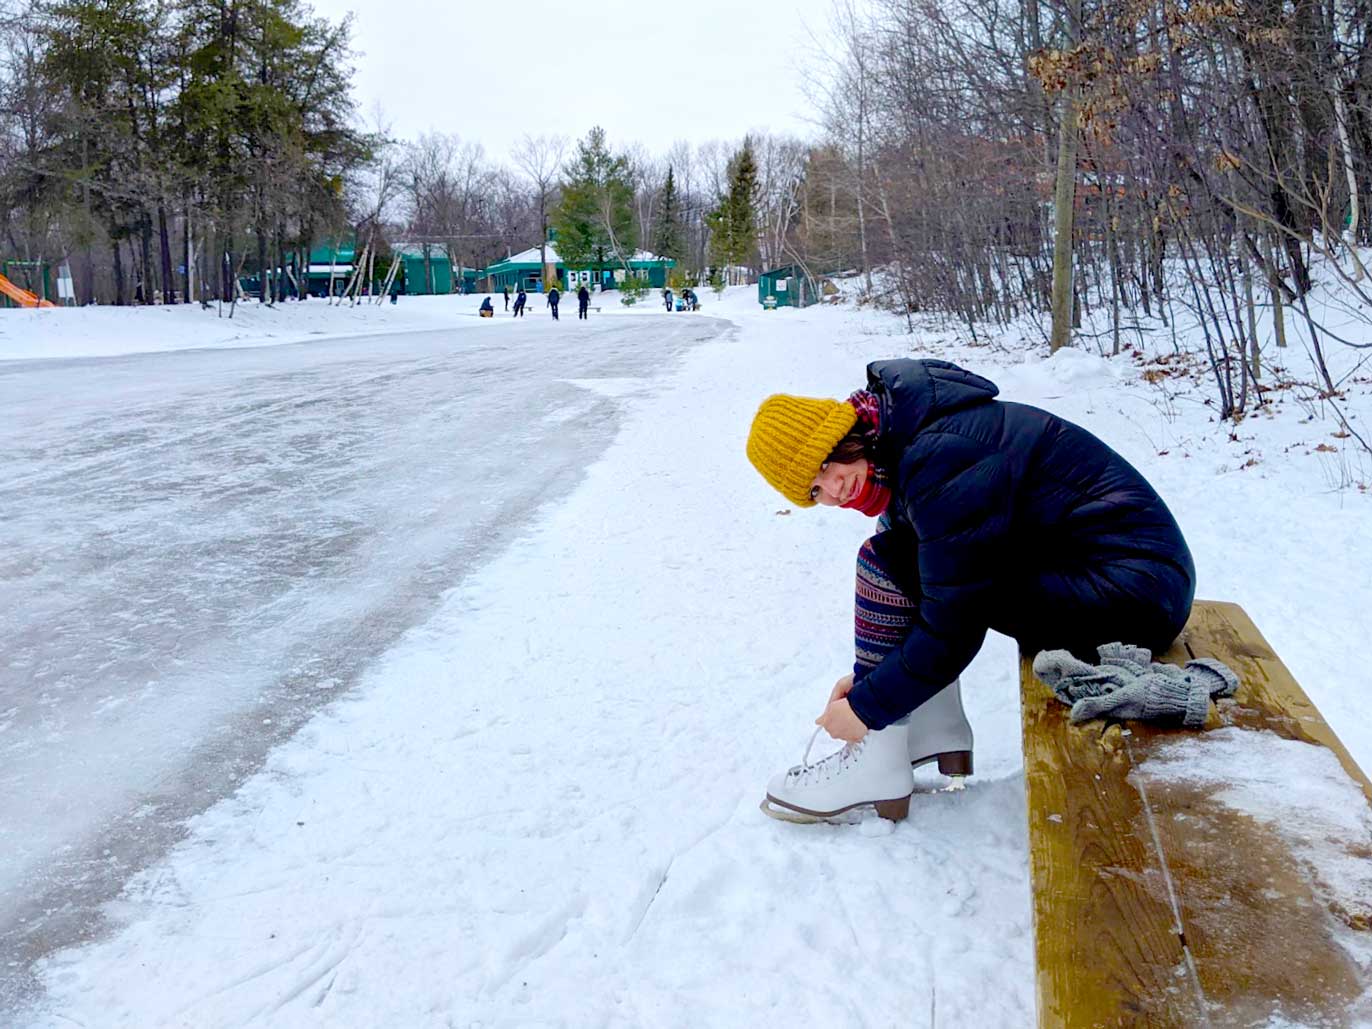 Montreal Winter Activities Skating 2 